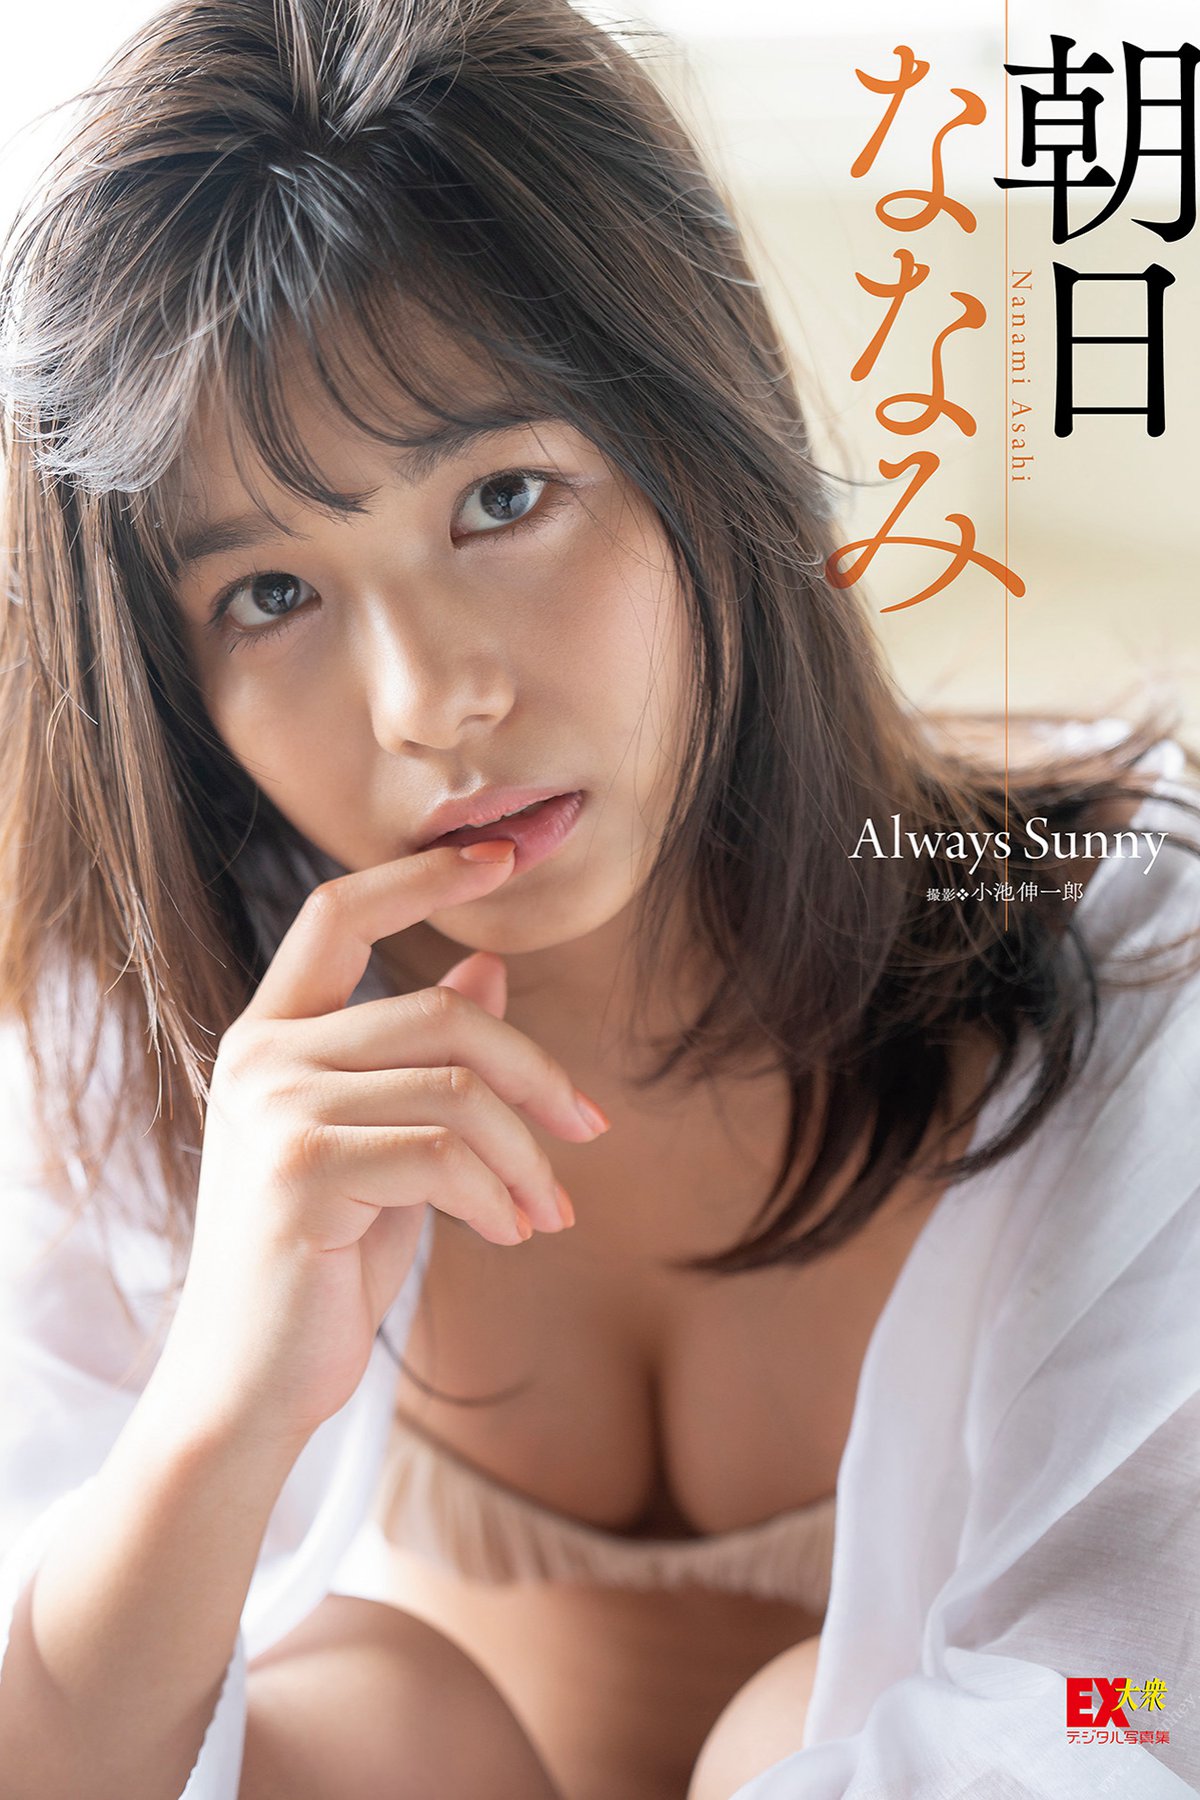 EX Taishu Photobook Nanami Asahi 朝日ななみ – Always Sunny 2021-09-15